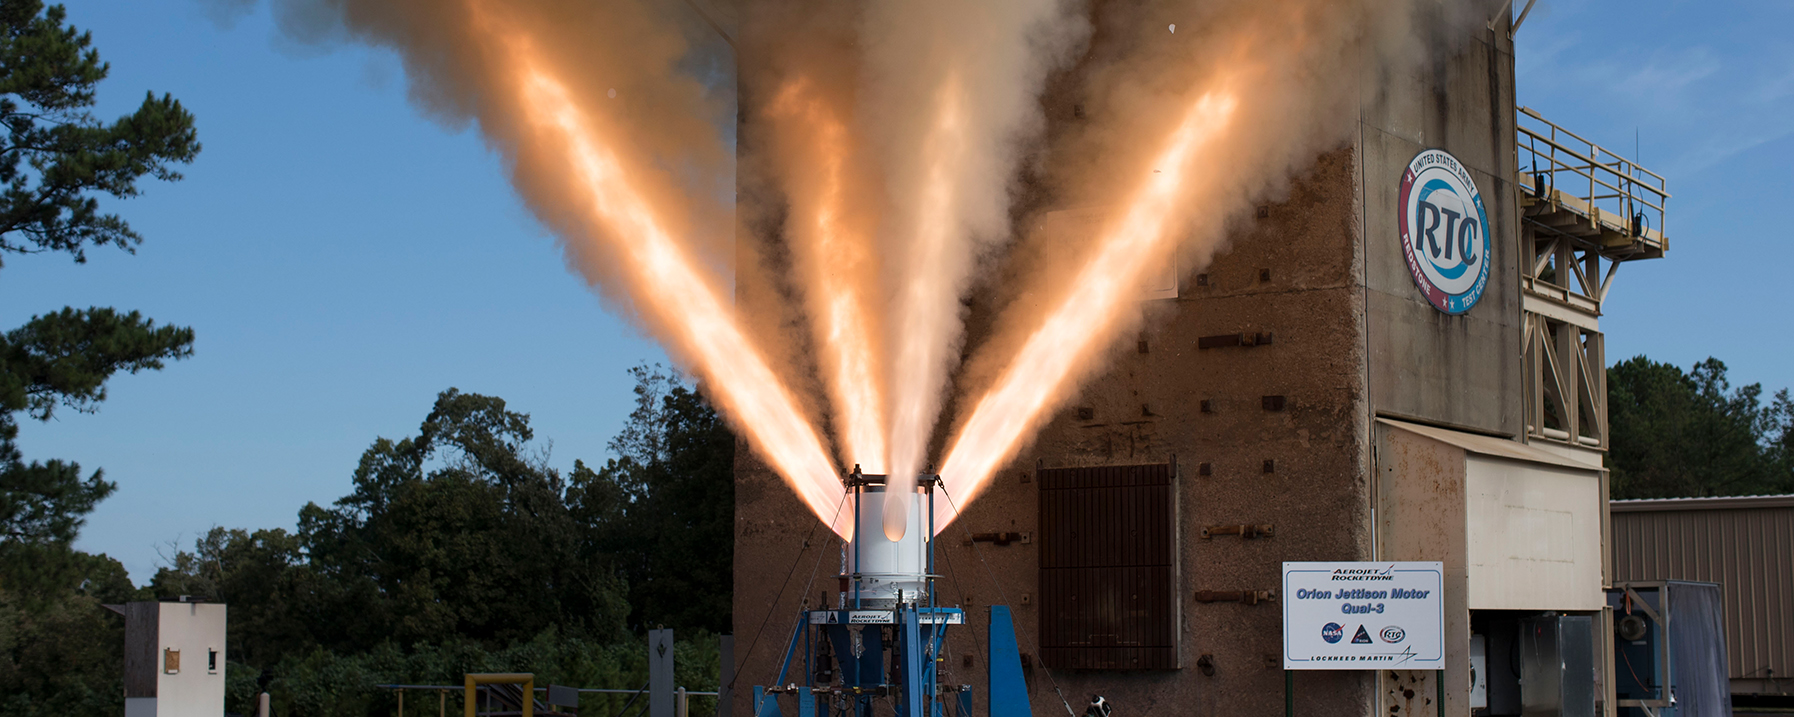 Rocket engine test